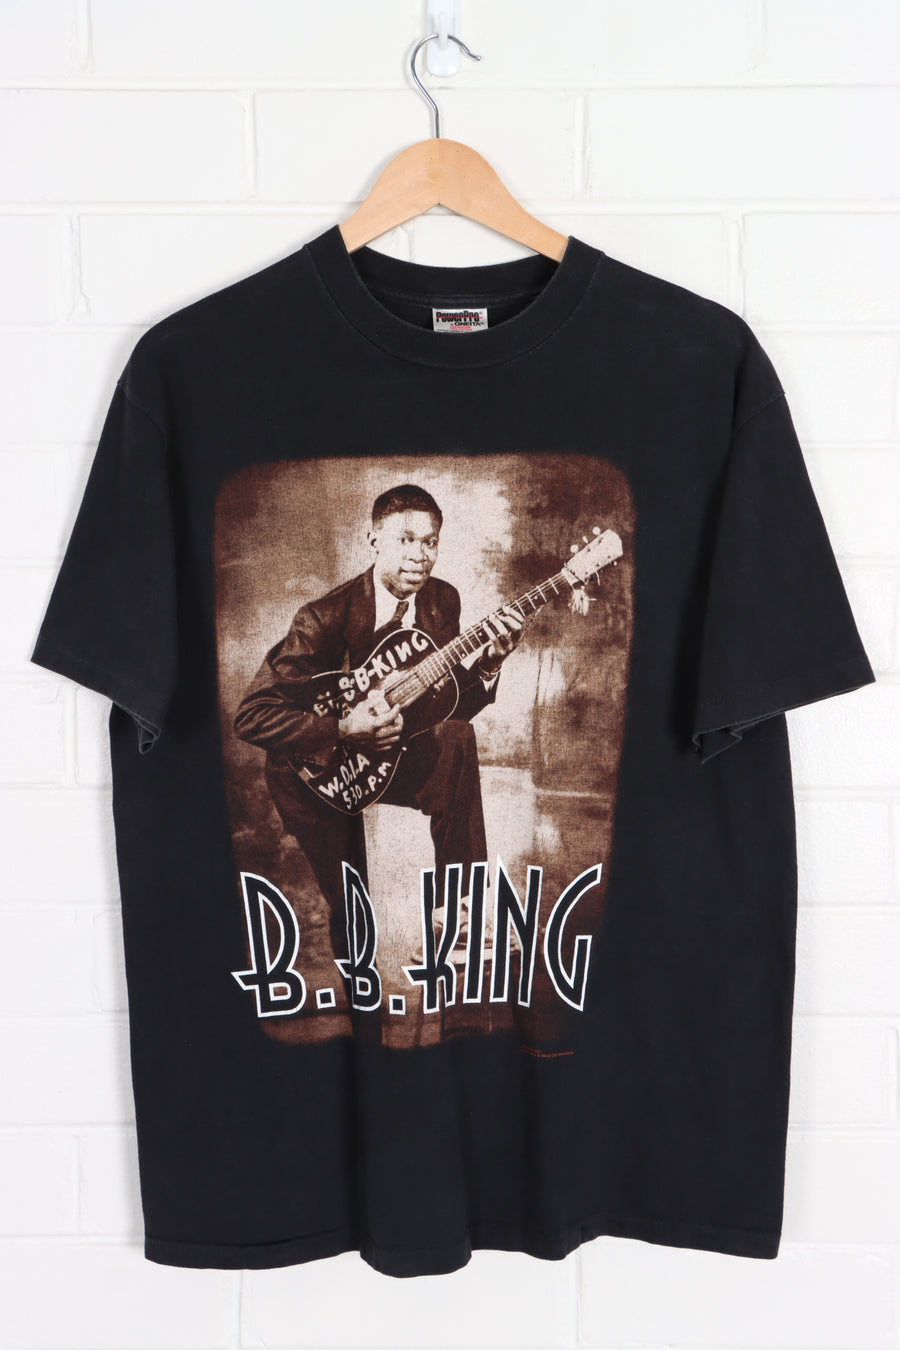 B.B. KING "of The Blues" 1996 World Tour Single Stitch T-Shirt (M-L)